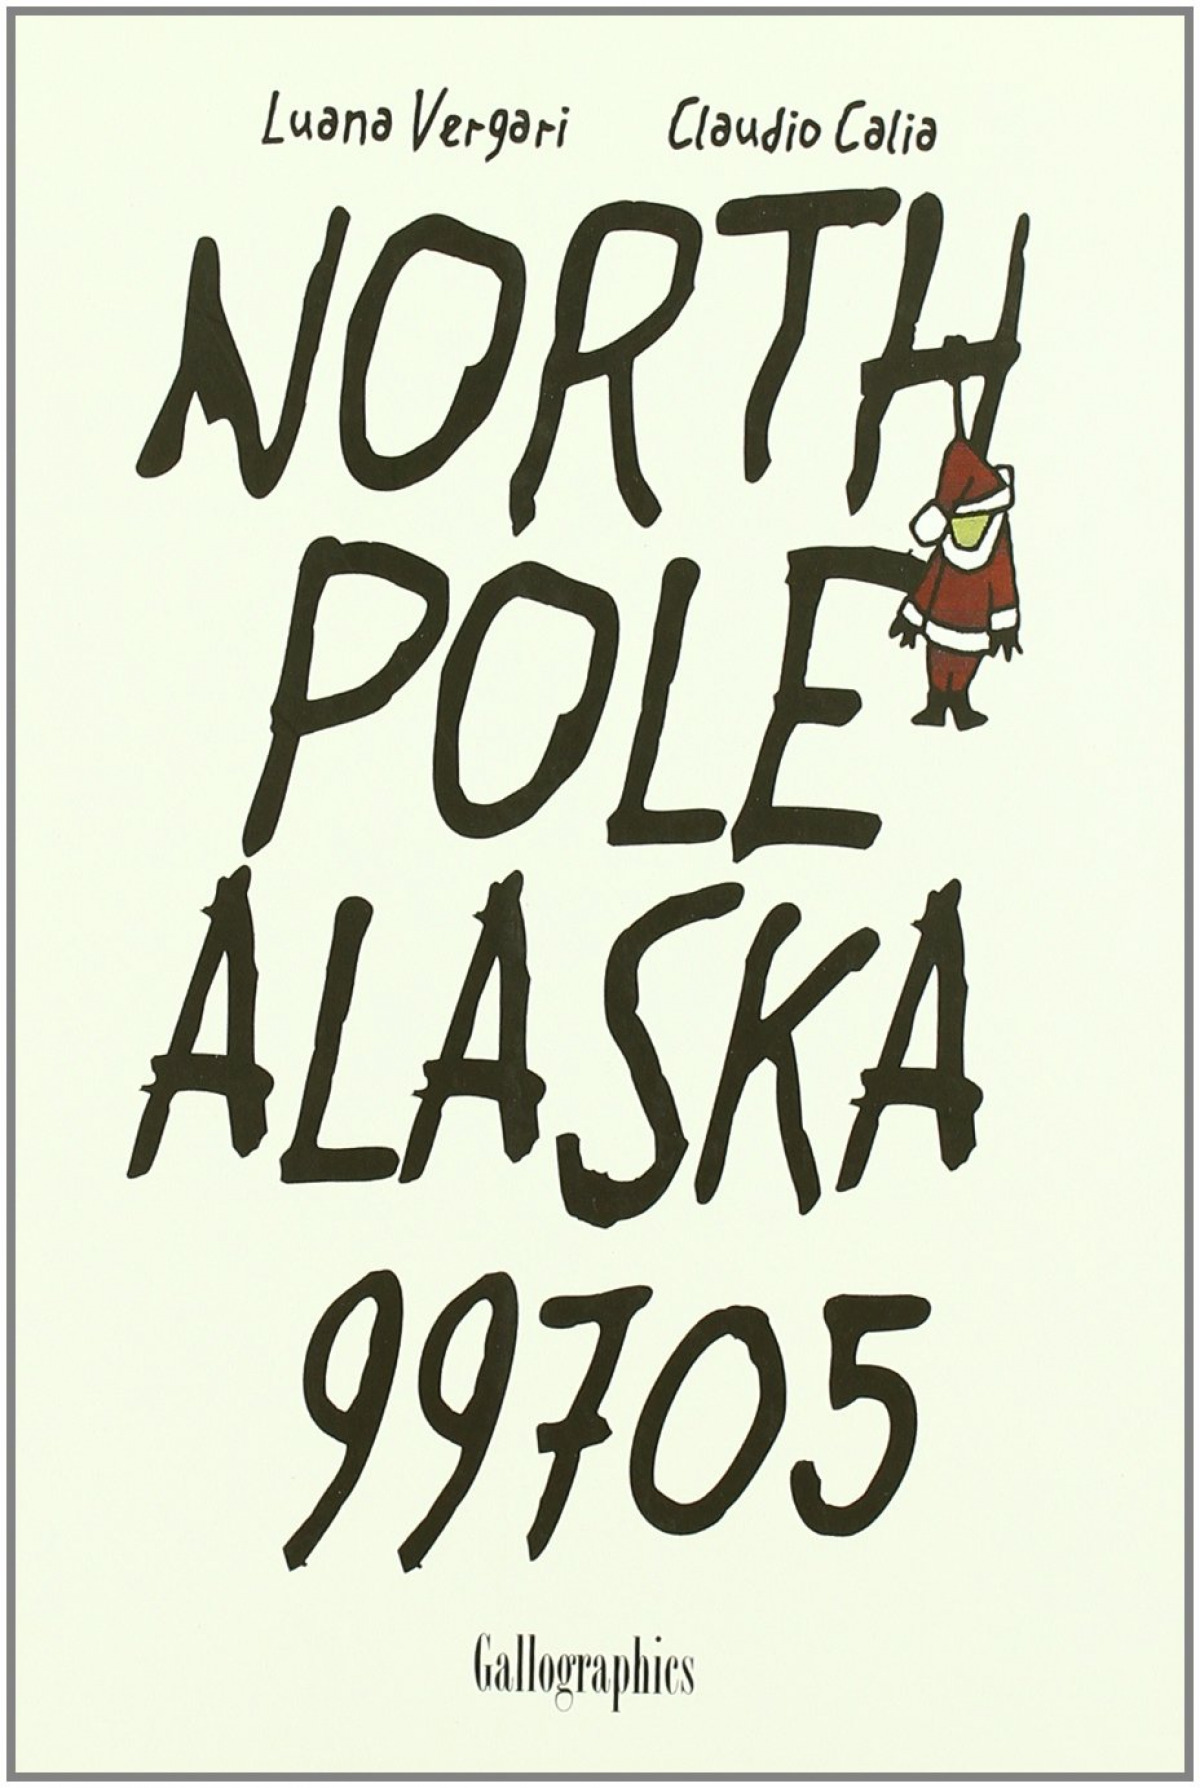 North pole alaska 99705 - Vergari, Luana/Calia, Claudio